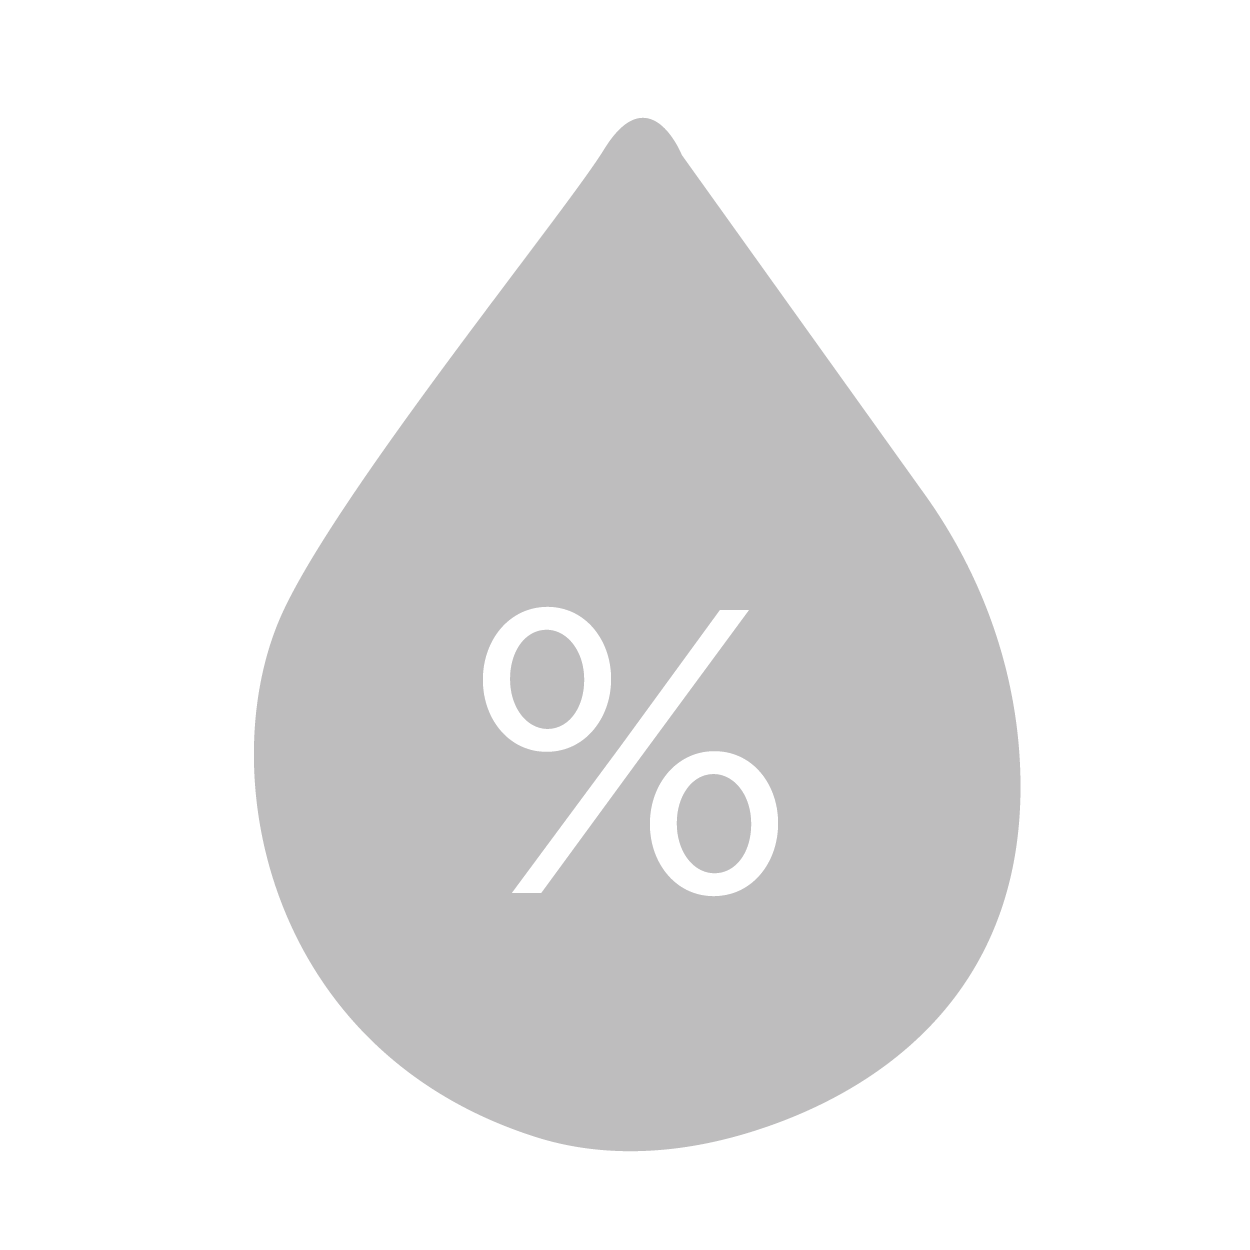 rfxcel humidity drop/percentage branded image